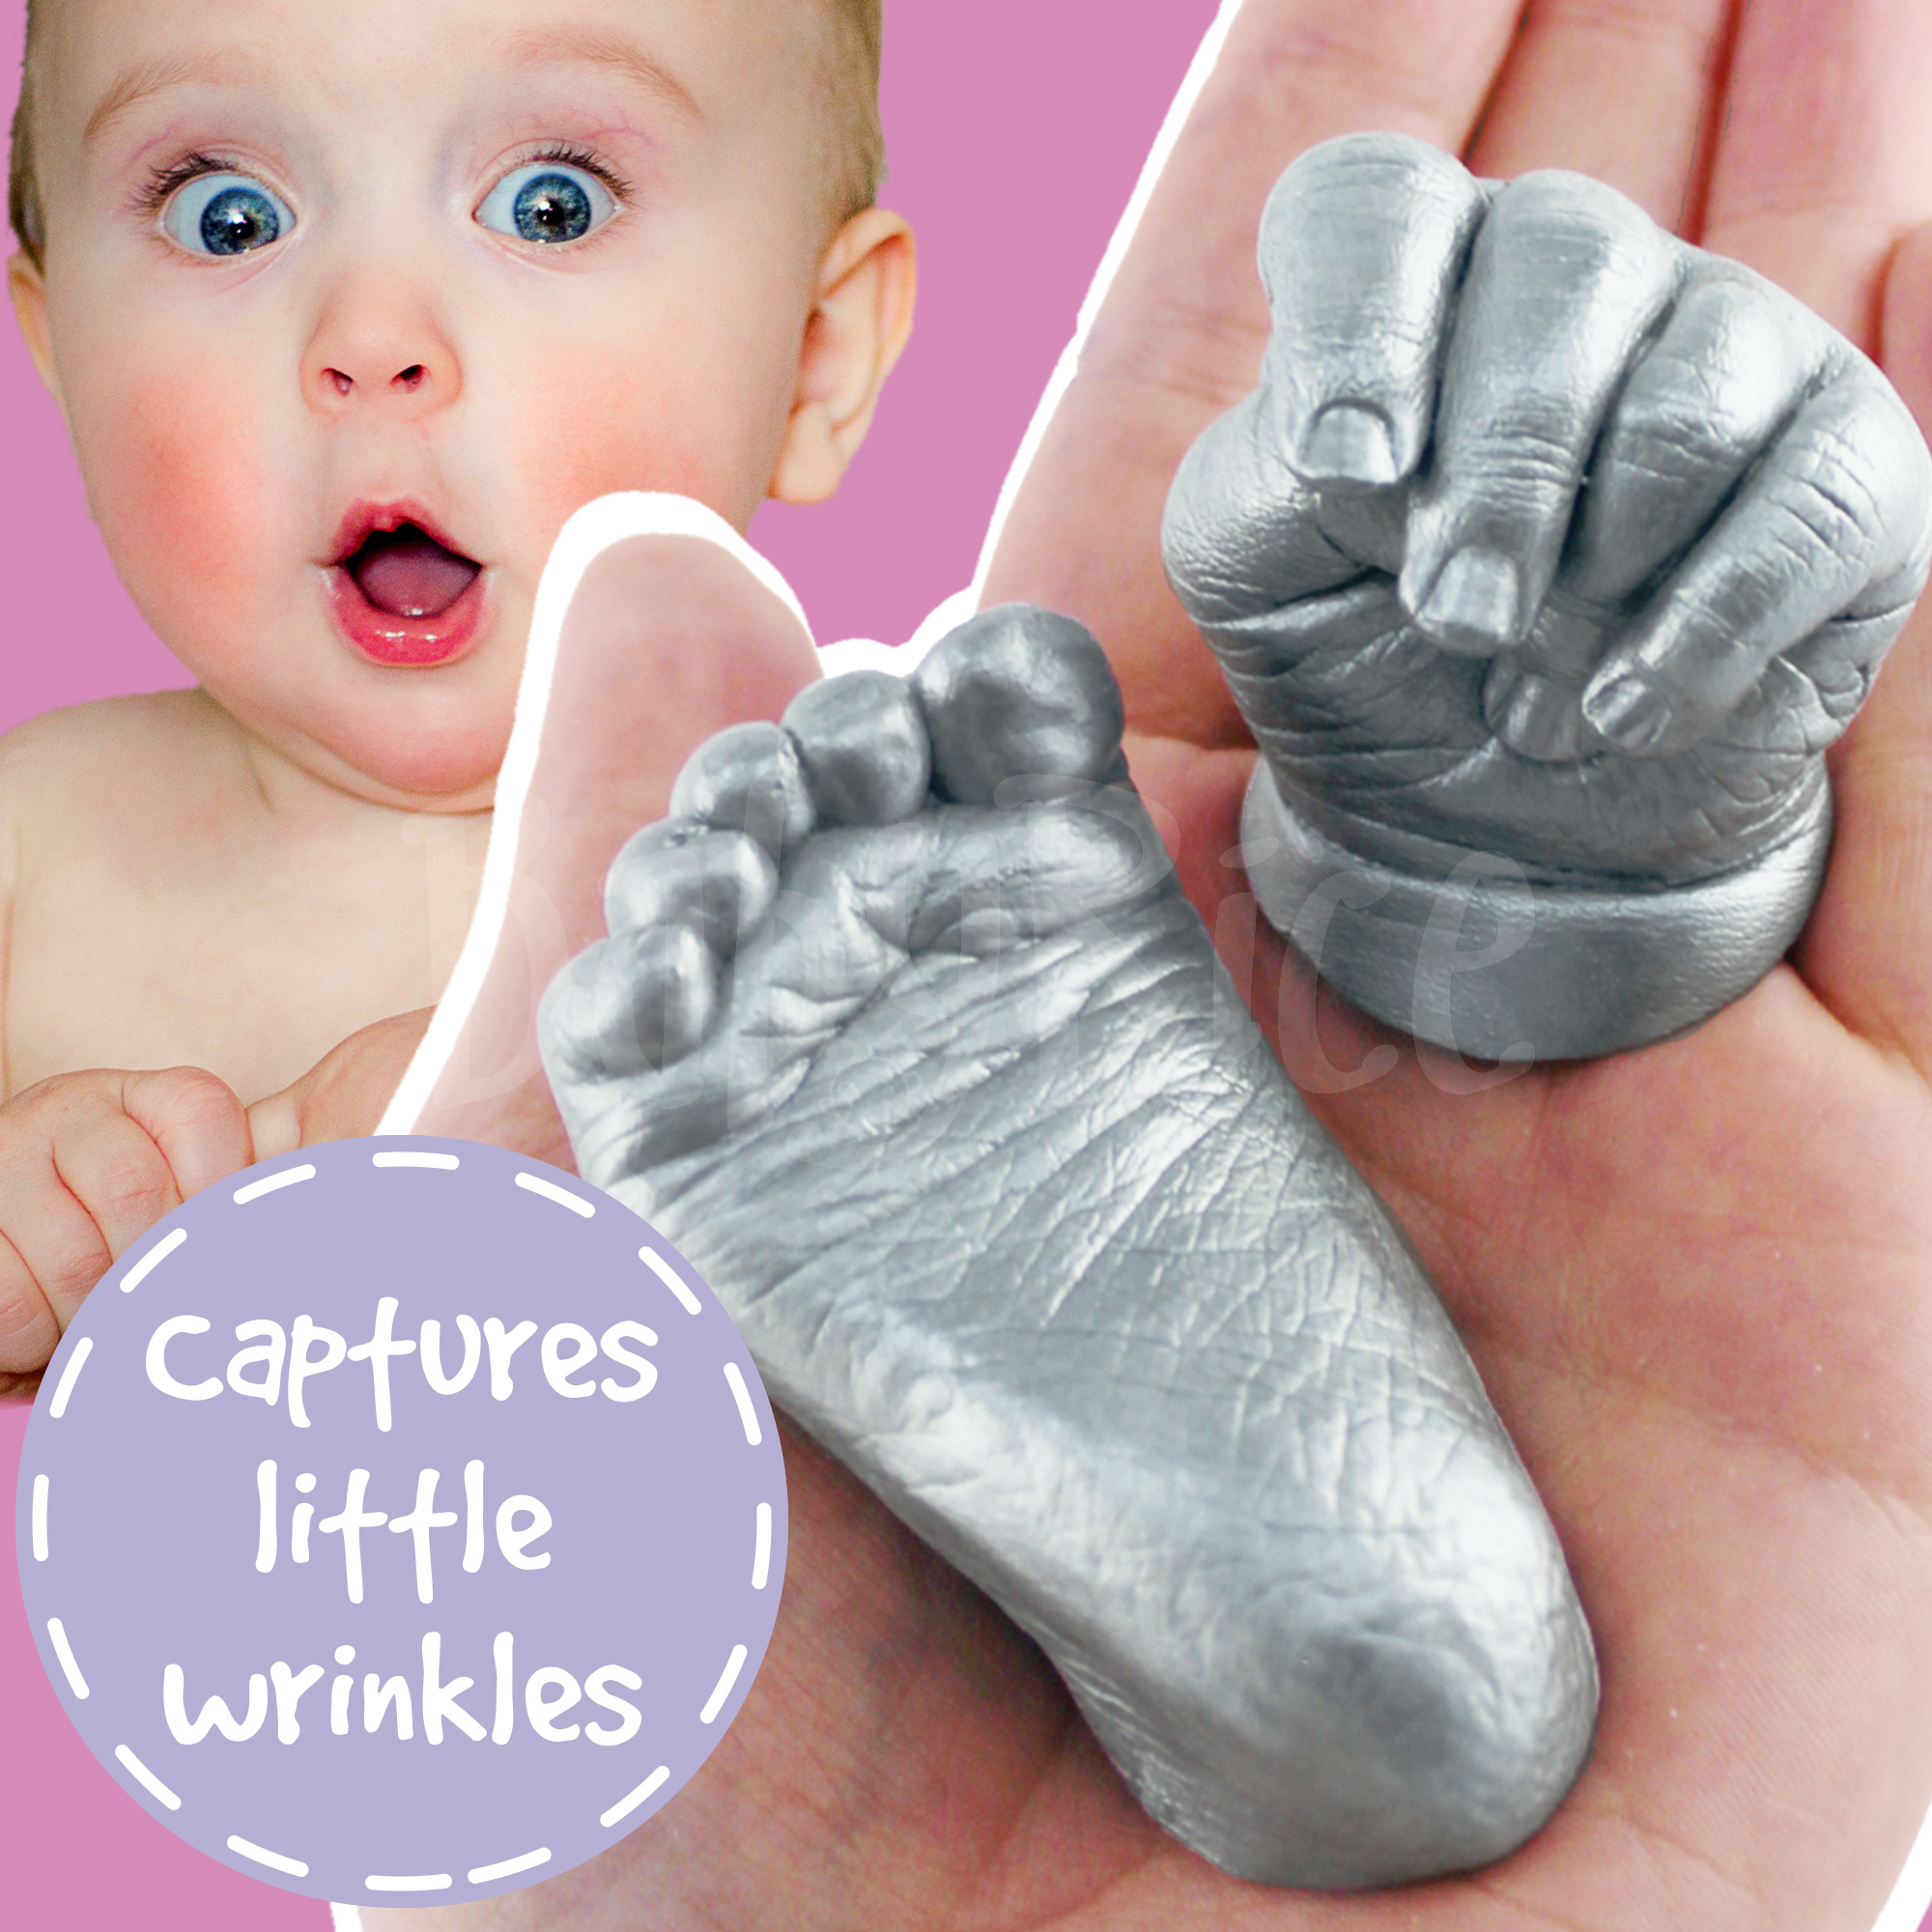  BabyRice 3D Handprints Footprints Baby Casting Kit